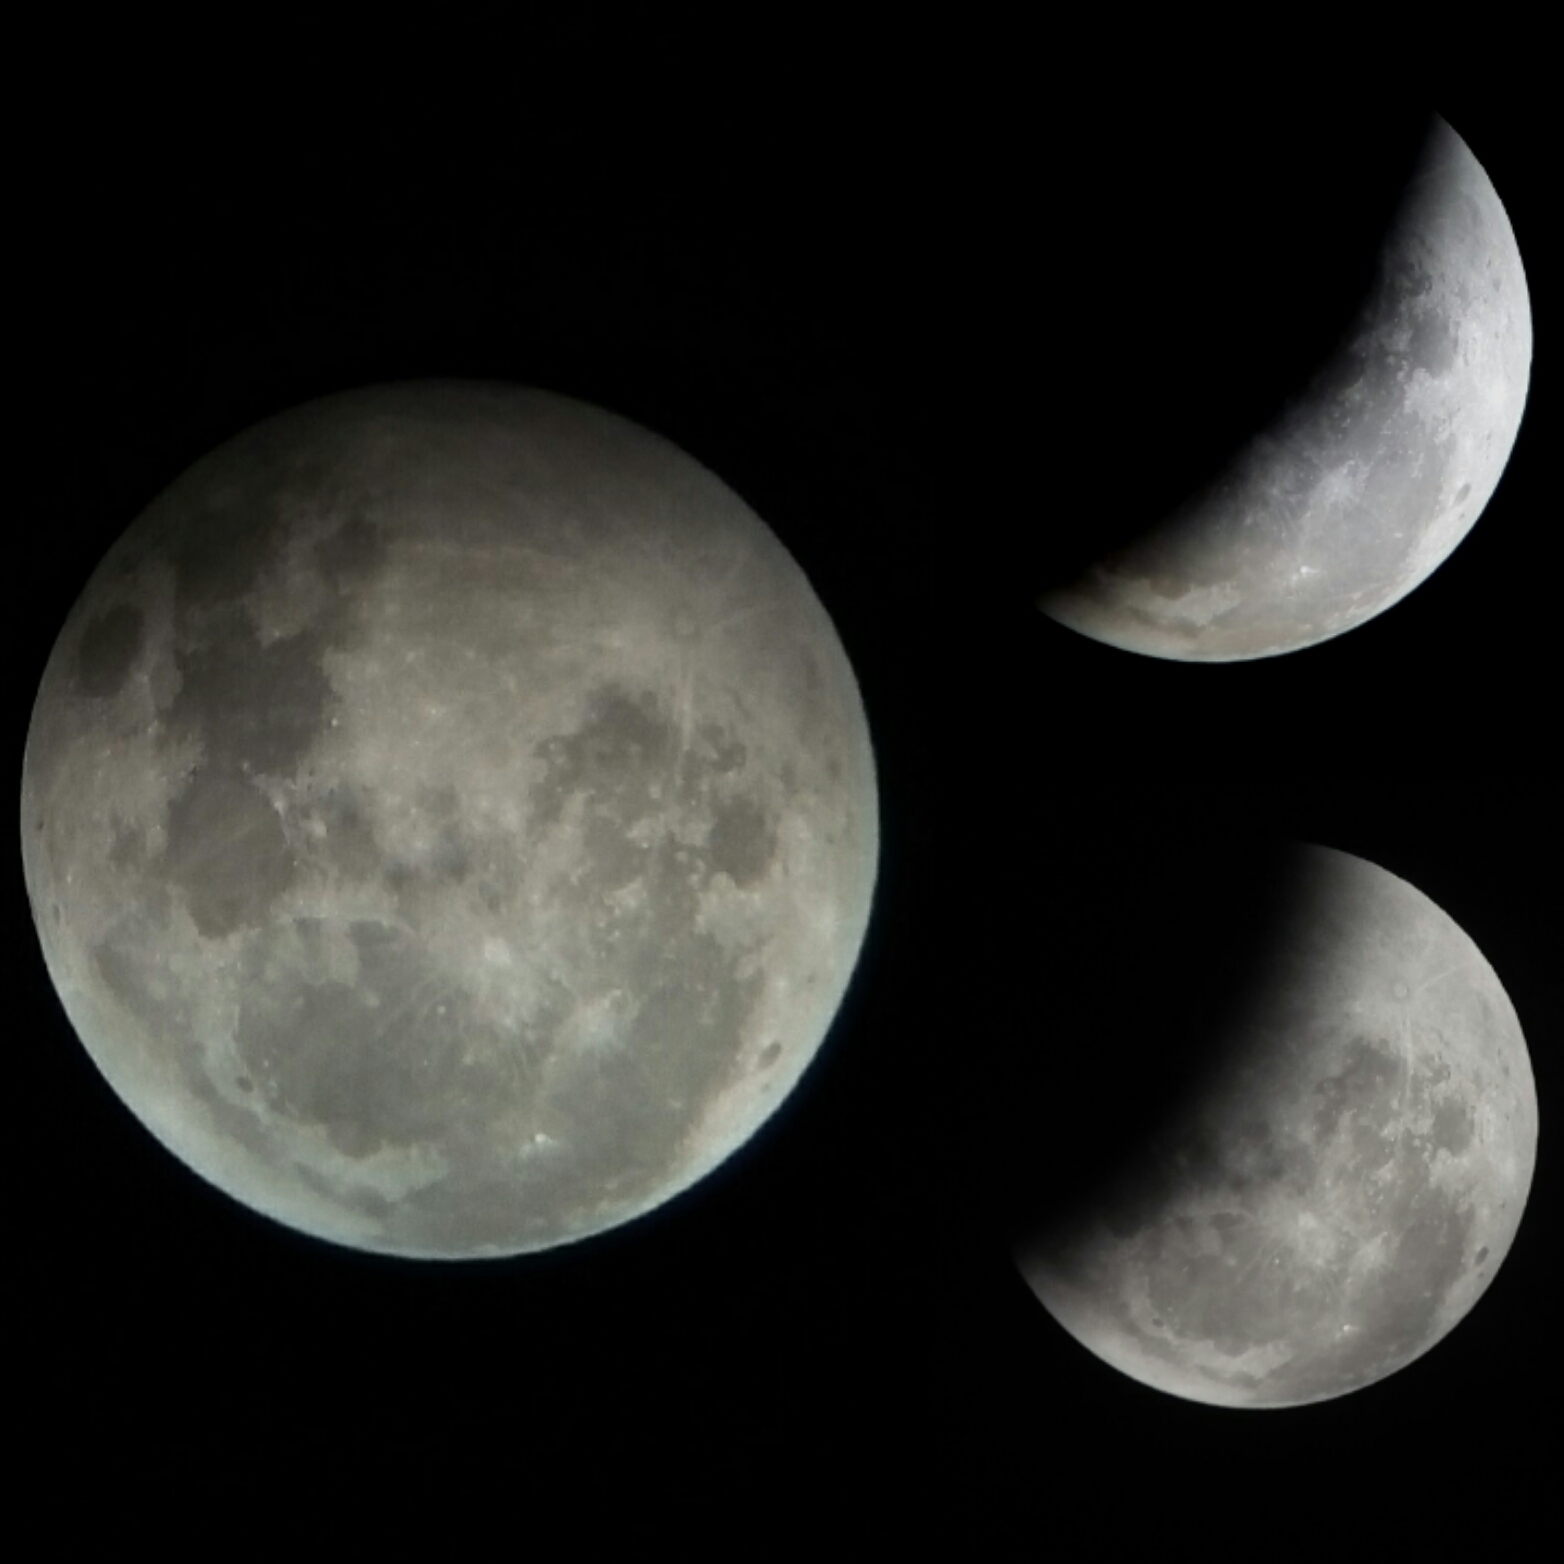 Lunar eclipse on 27 July 2018